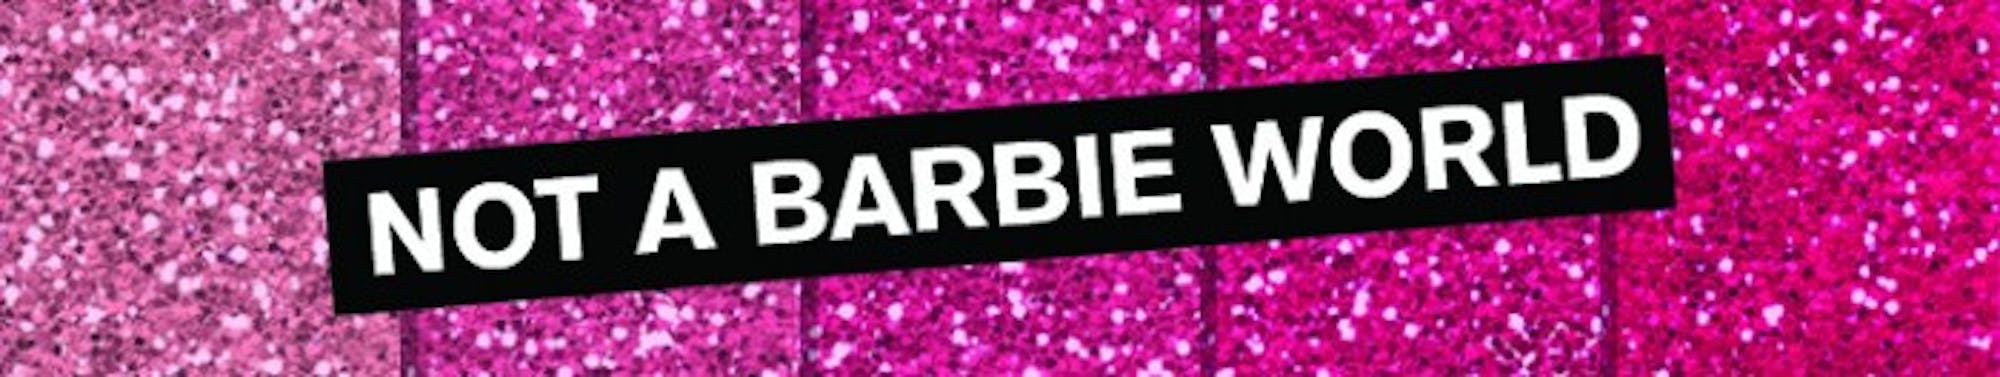 web_barbie